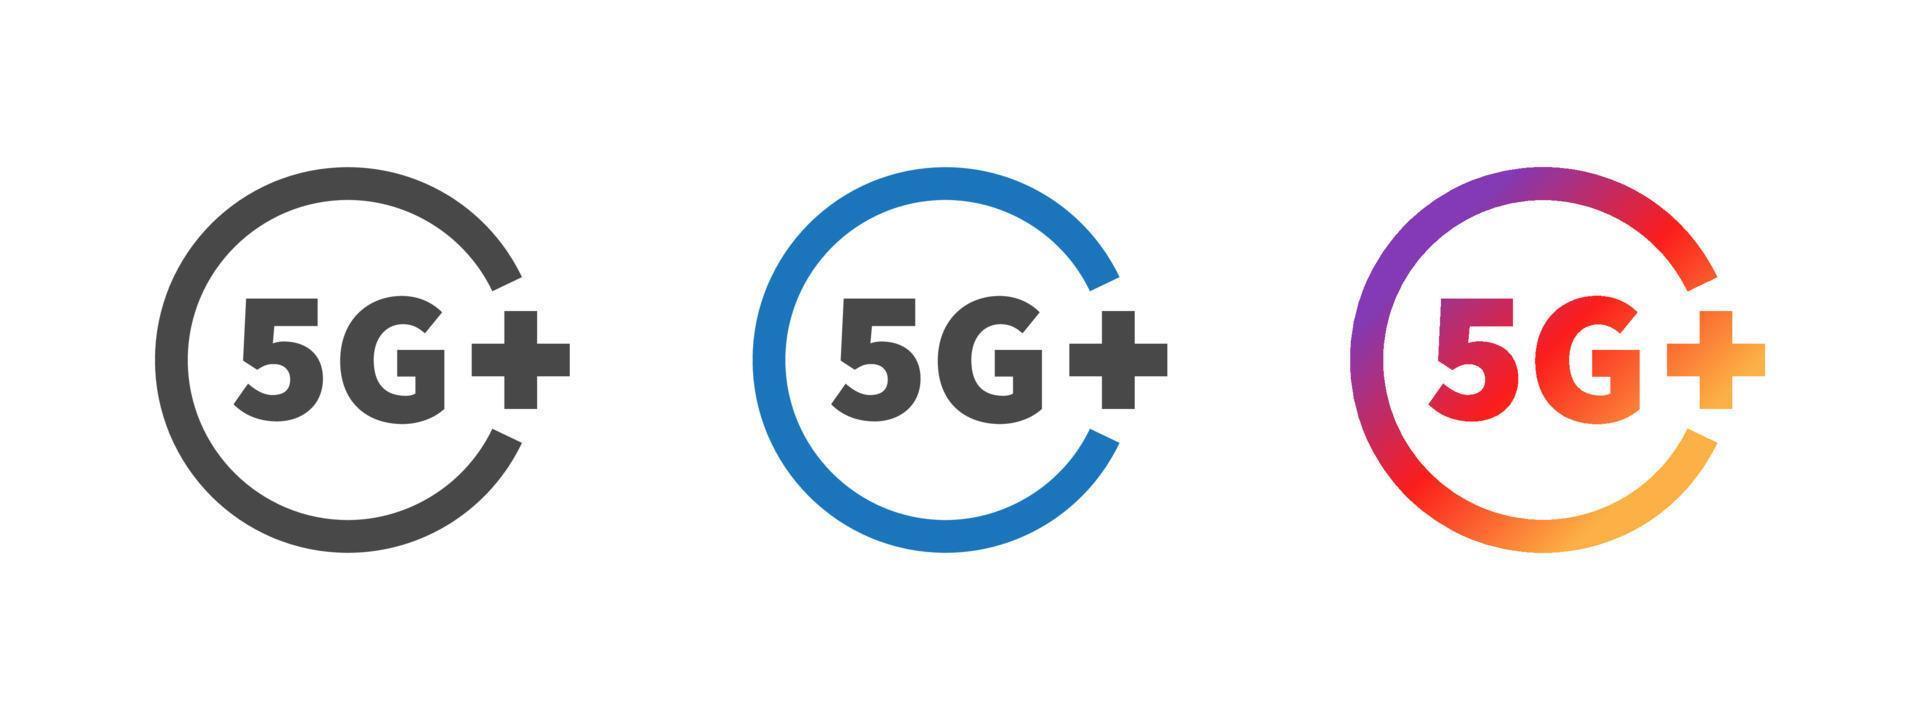 5g-Symbole. Hochgeschwindigkeits-Internet-Logo. 5g-Kommunikationstechnologie. Vektorbilder vektor